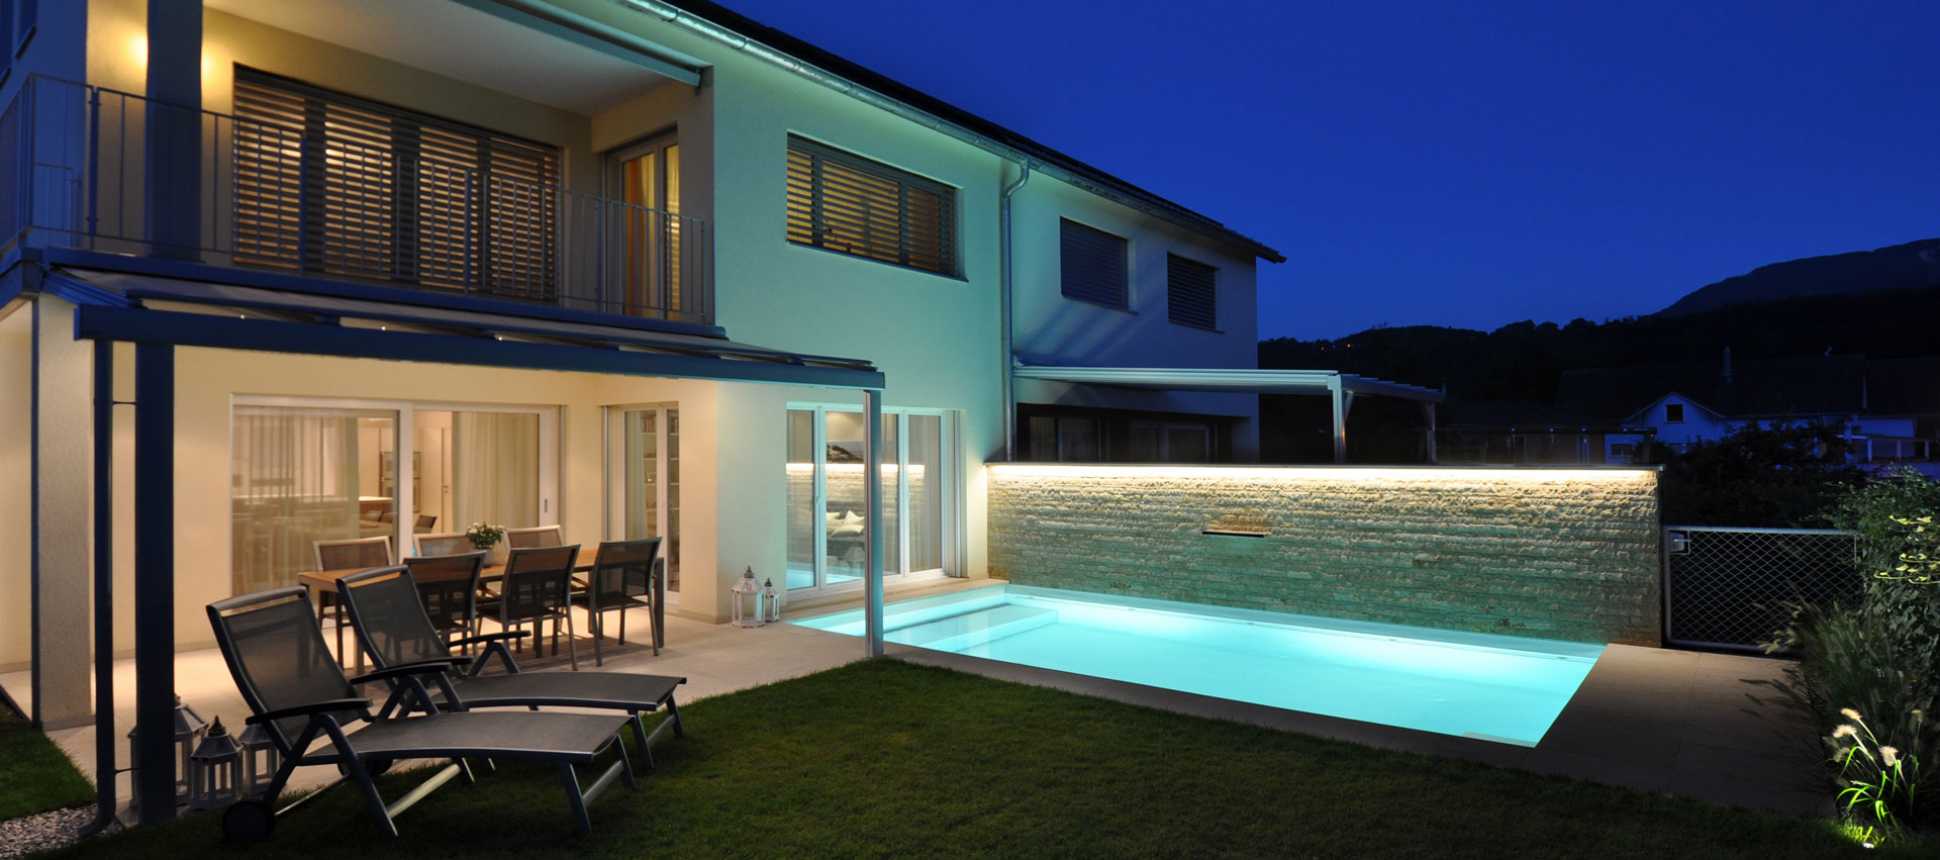 Haus mit Swimmingpool beleuchtet